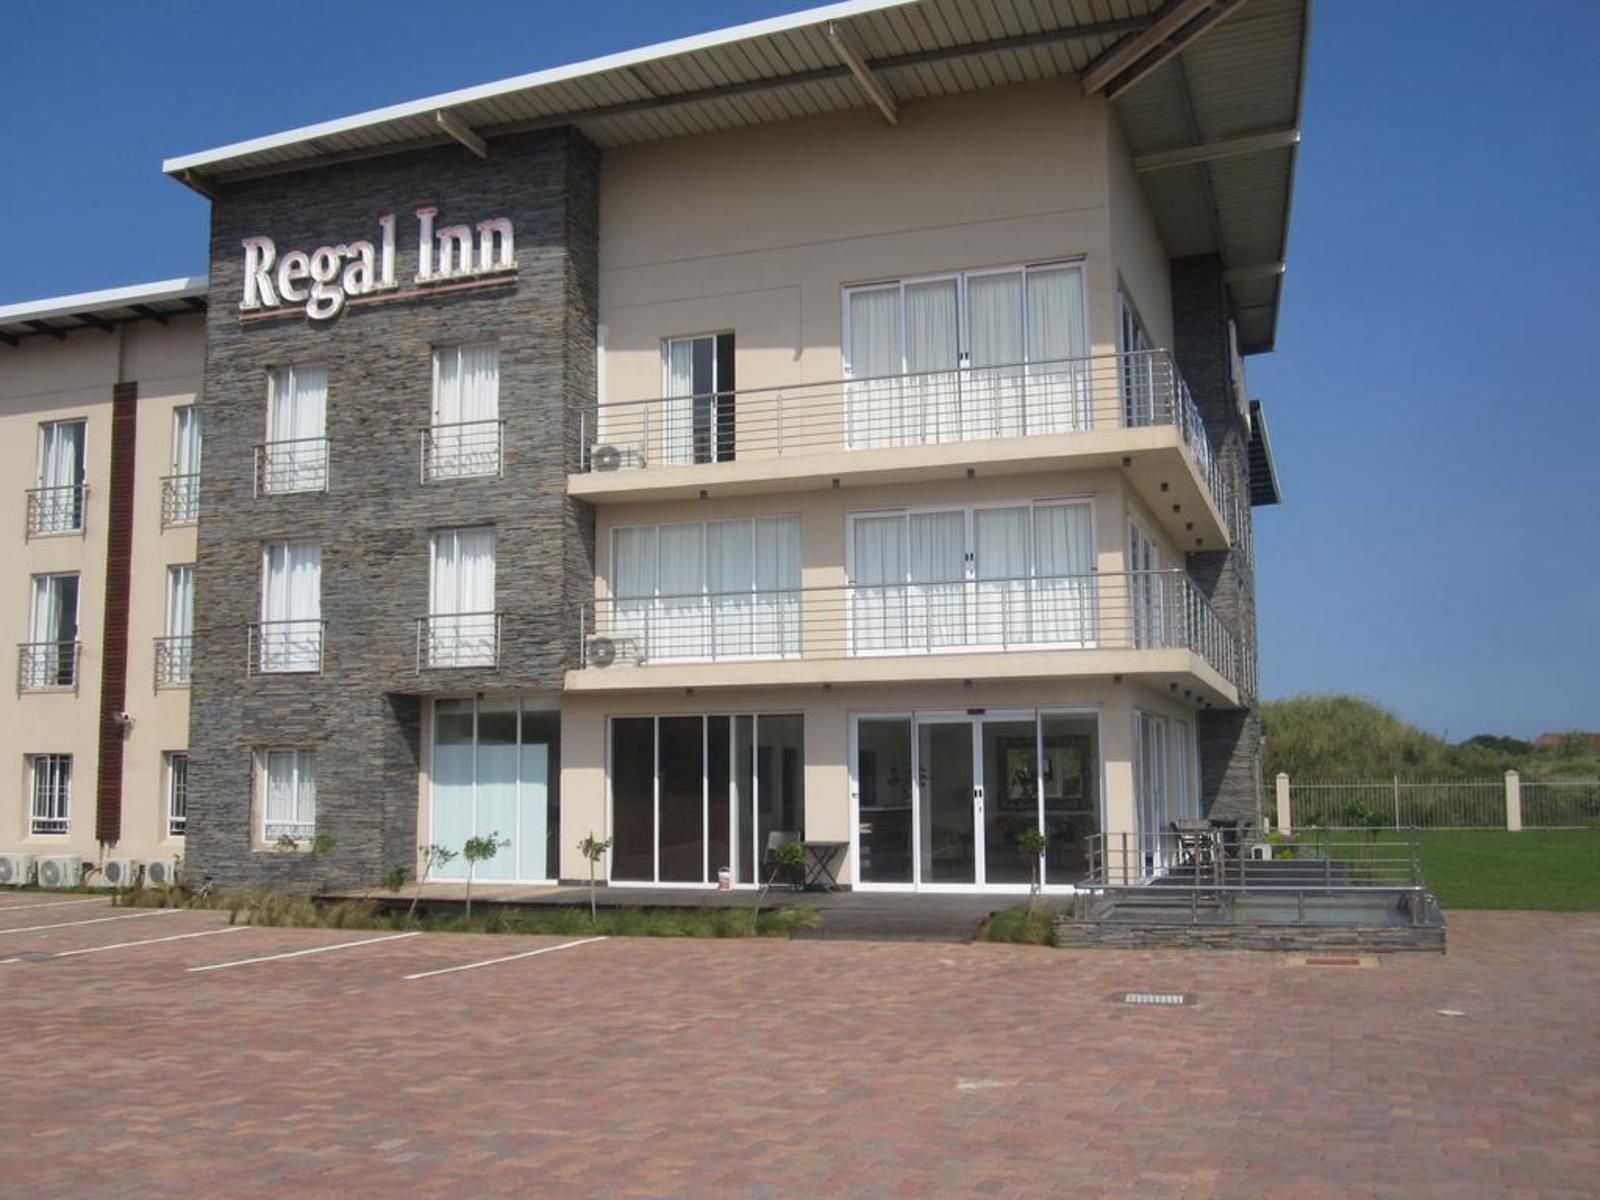 Regal Inn Ballito Kwazulu Natal South Africa Building, Architecture, House